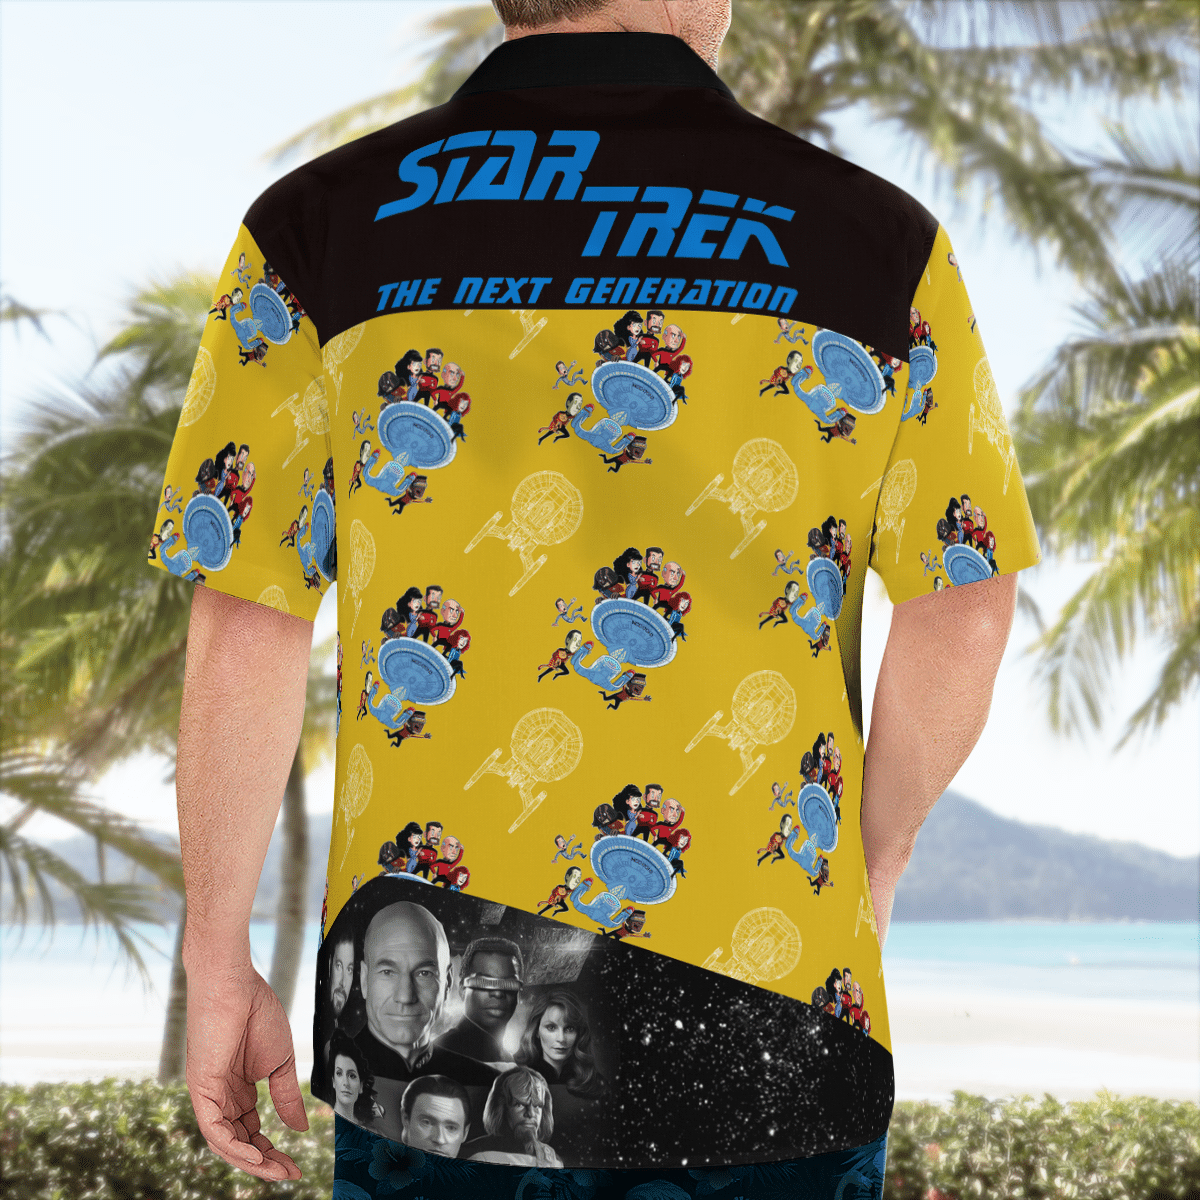 Star Trek operation hawaiian shirt 1.3